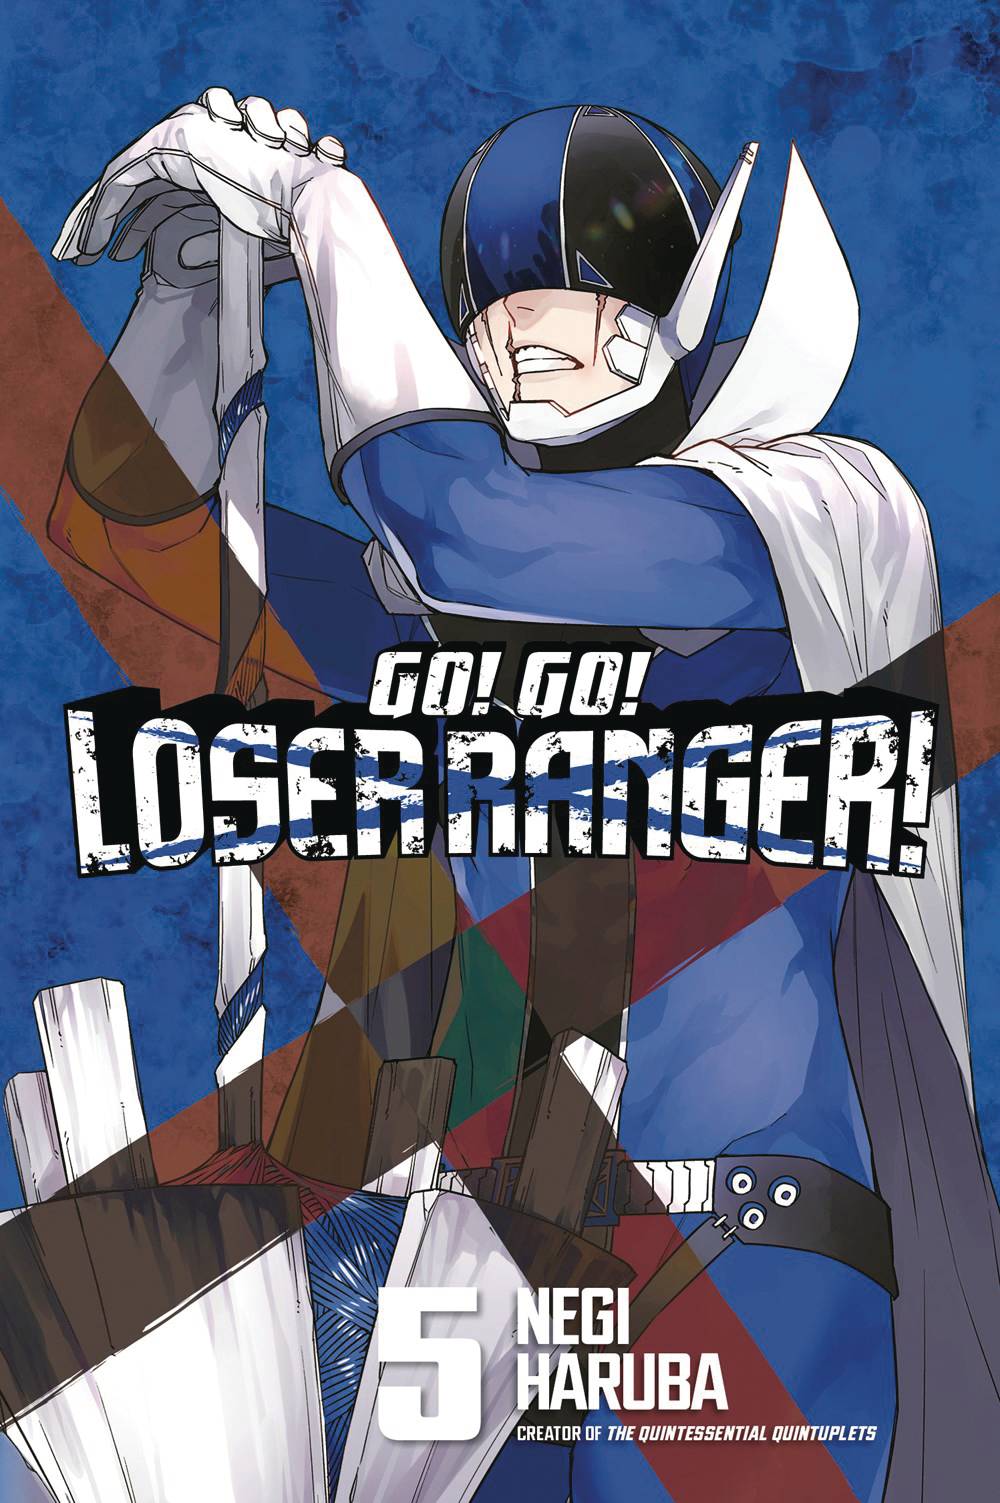 Go Go Loser Ranger GN Vol 06 (MR)